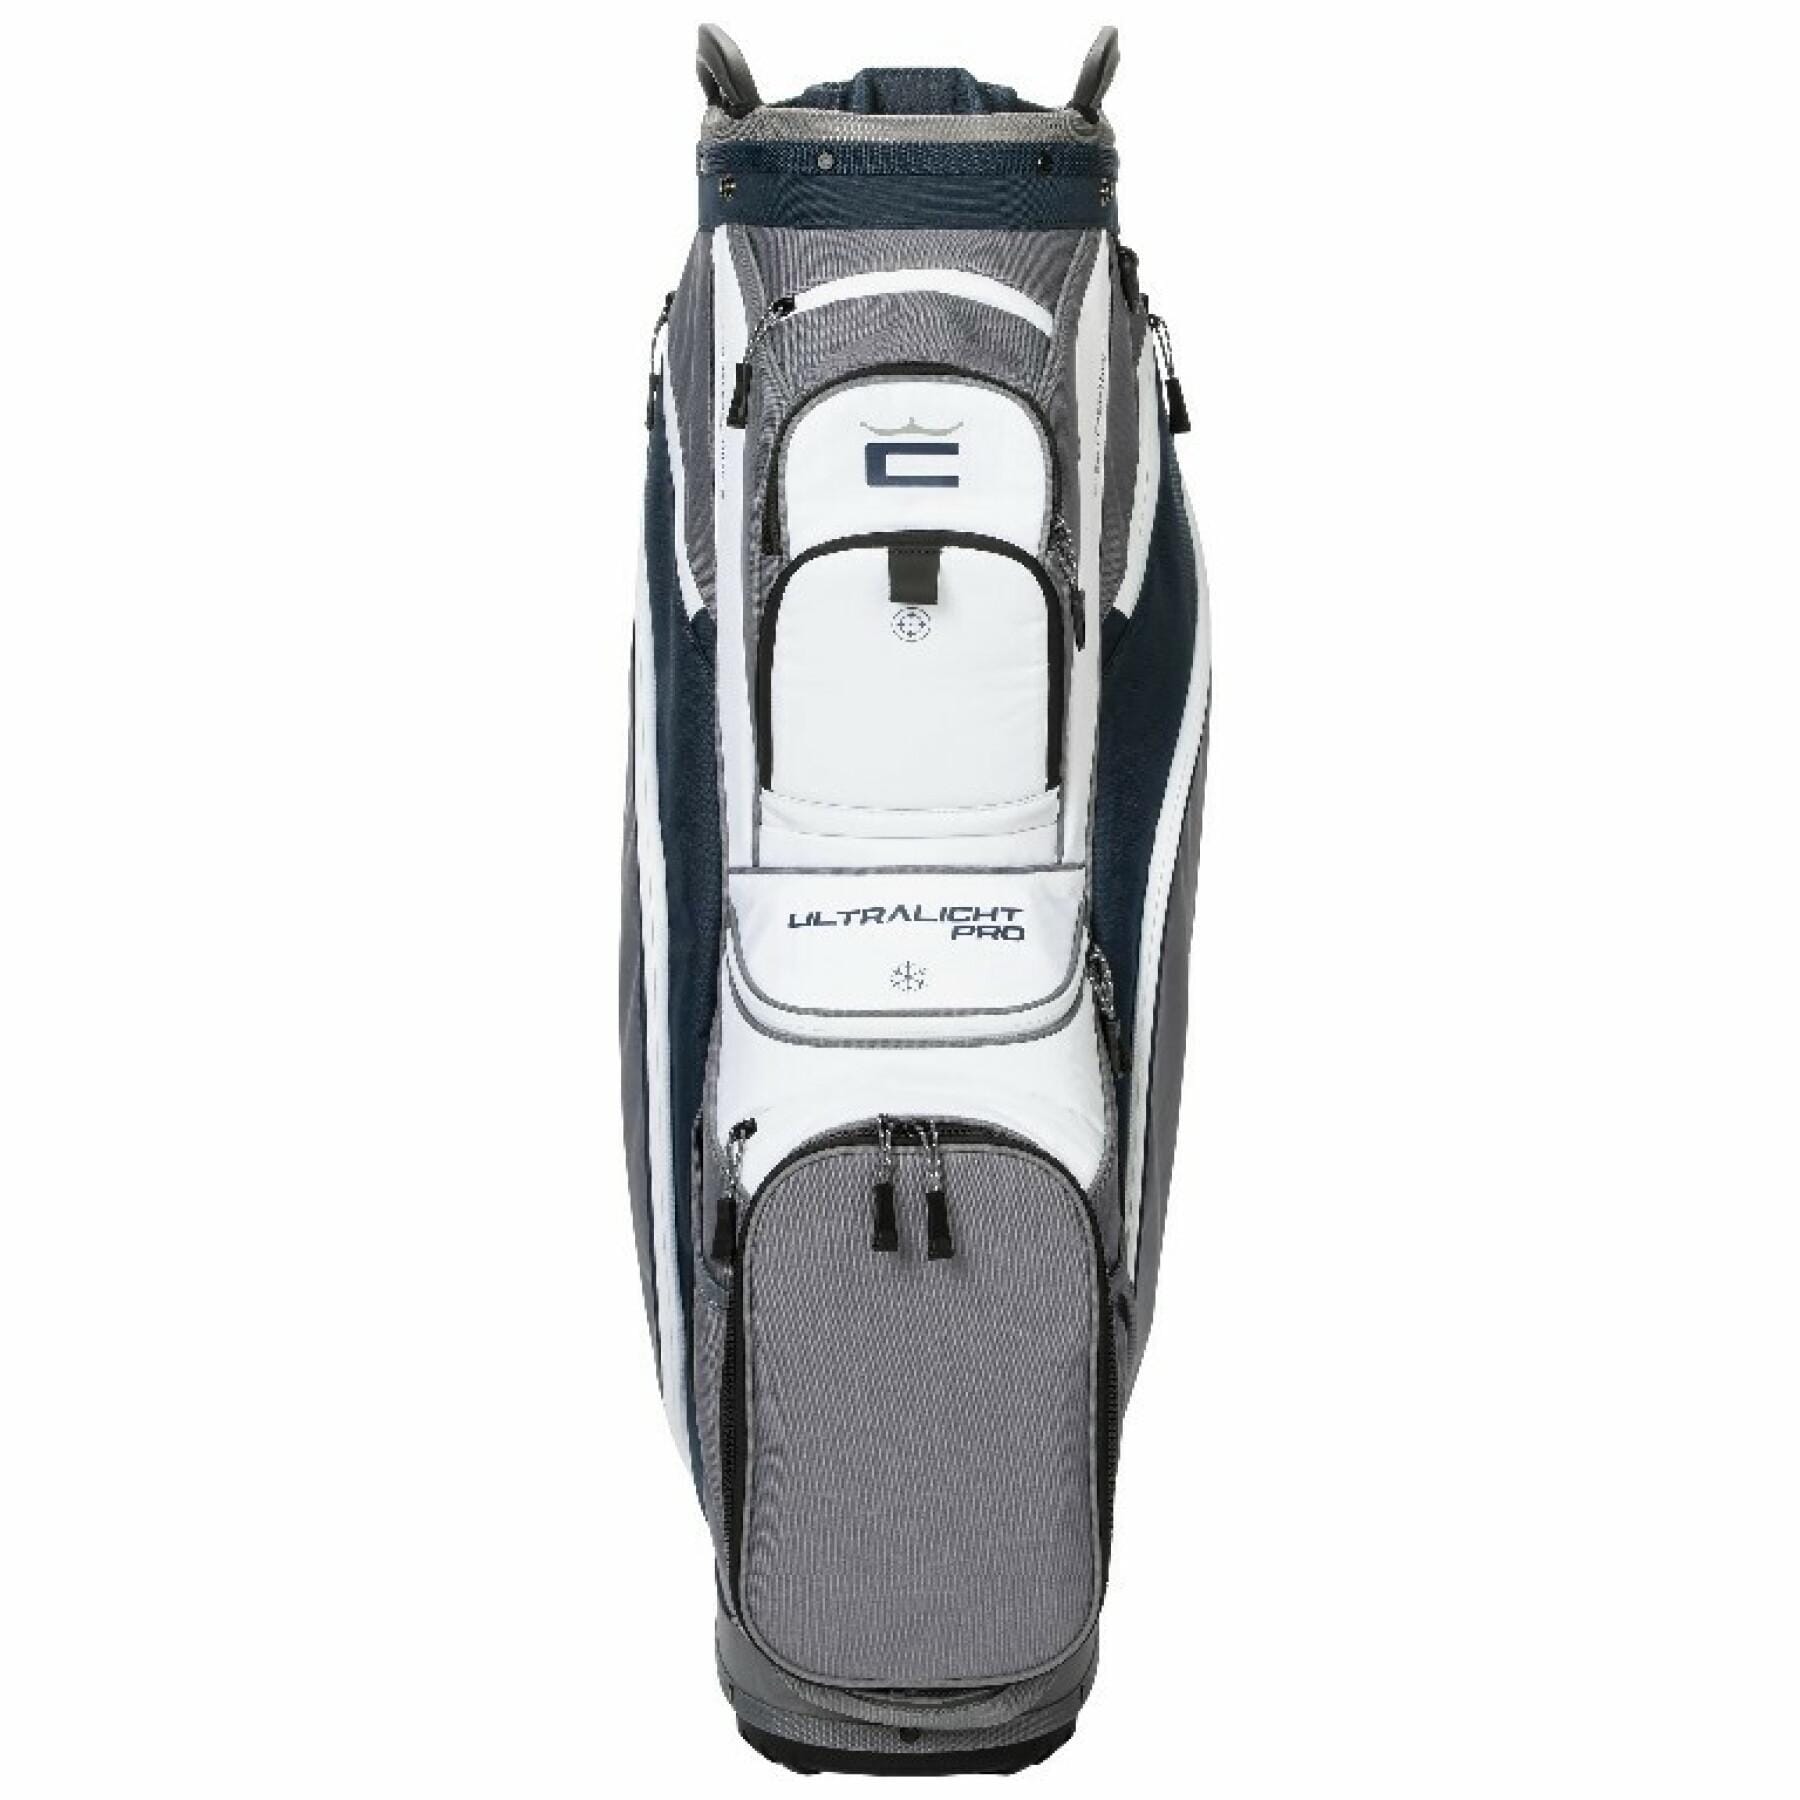 Cobra 2022 Ultralight Pro Cart Bag COBRA CARRO BOLSOS Galaxy Golf